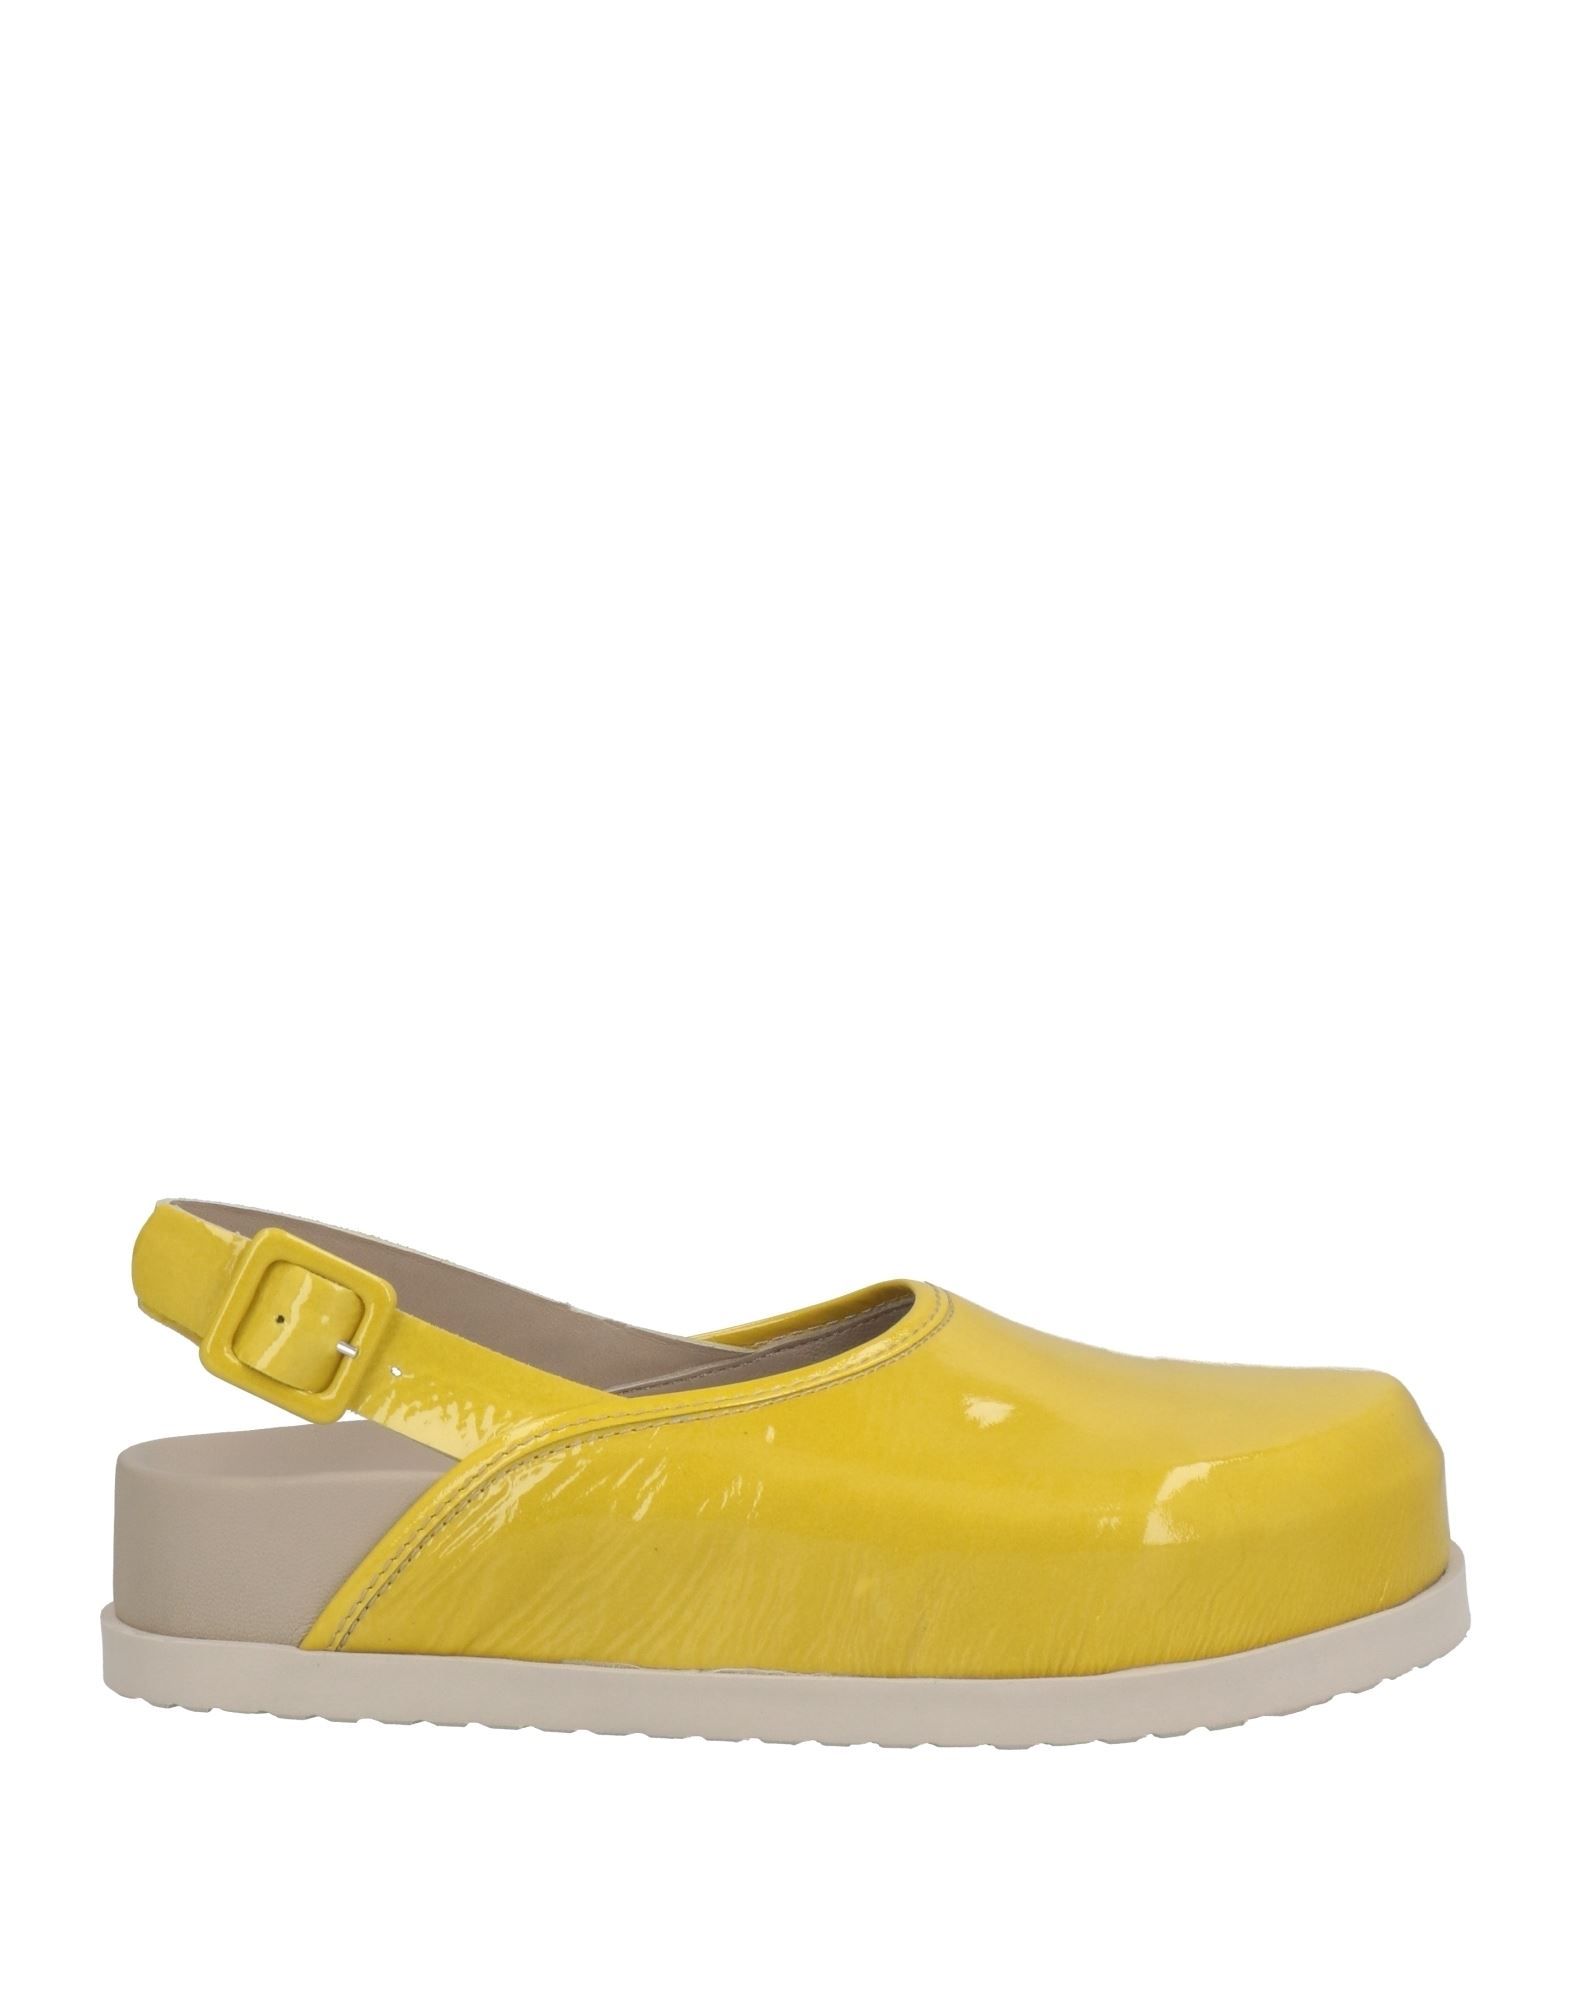 Patrizia Bonfanti Woman Mules & Clogs Yellow Size 7 Soft Leather